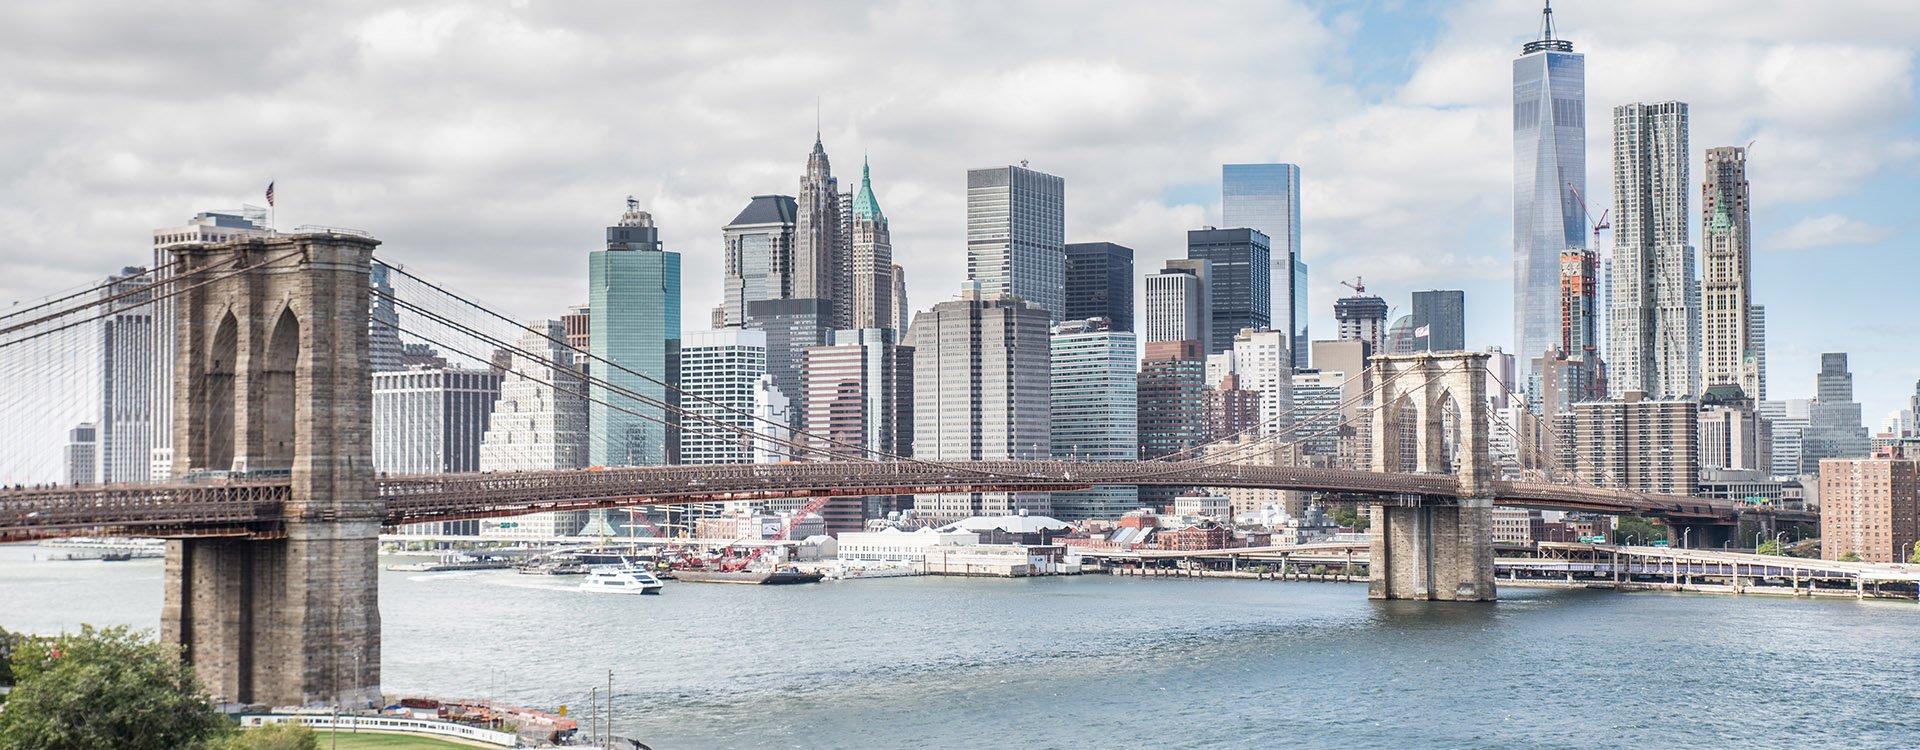 View of Brooklyn Bridge and Manhattan skyline - New York City